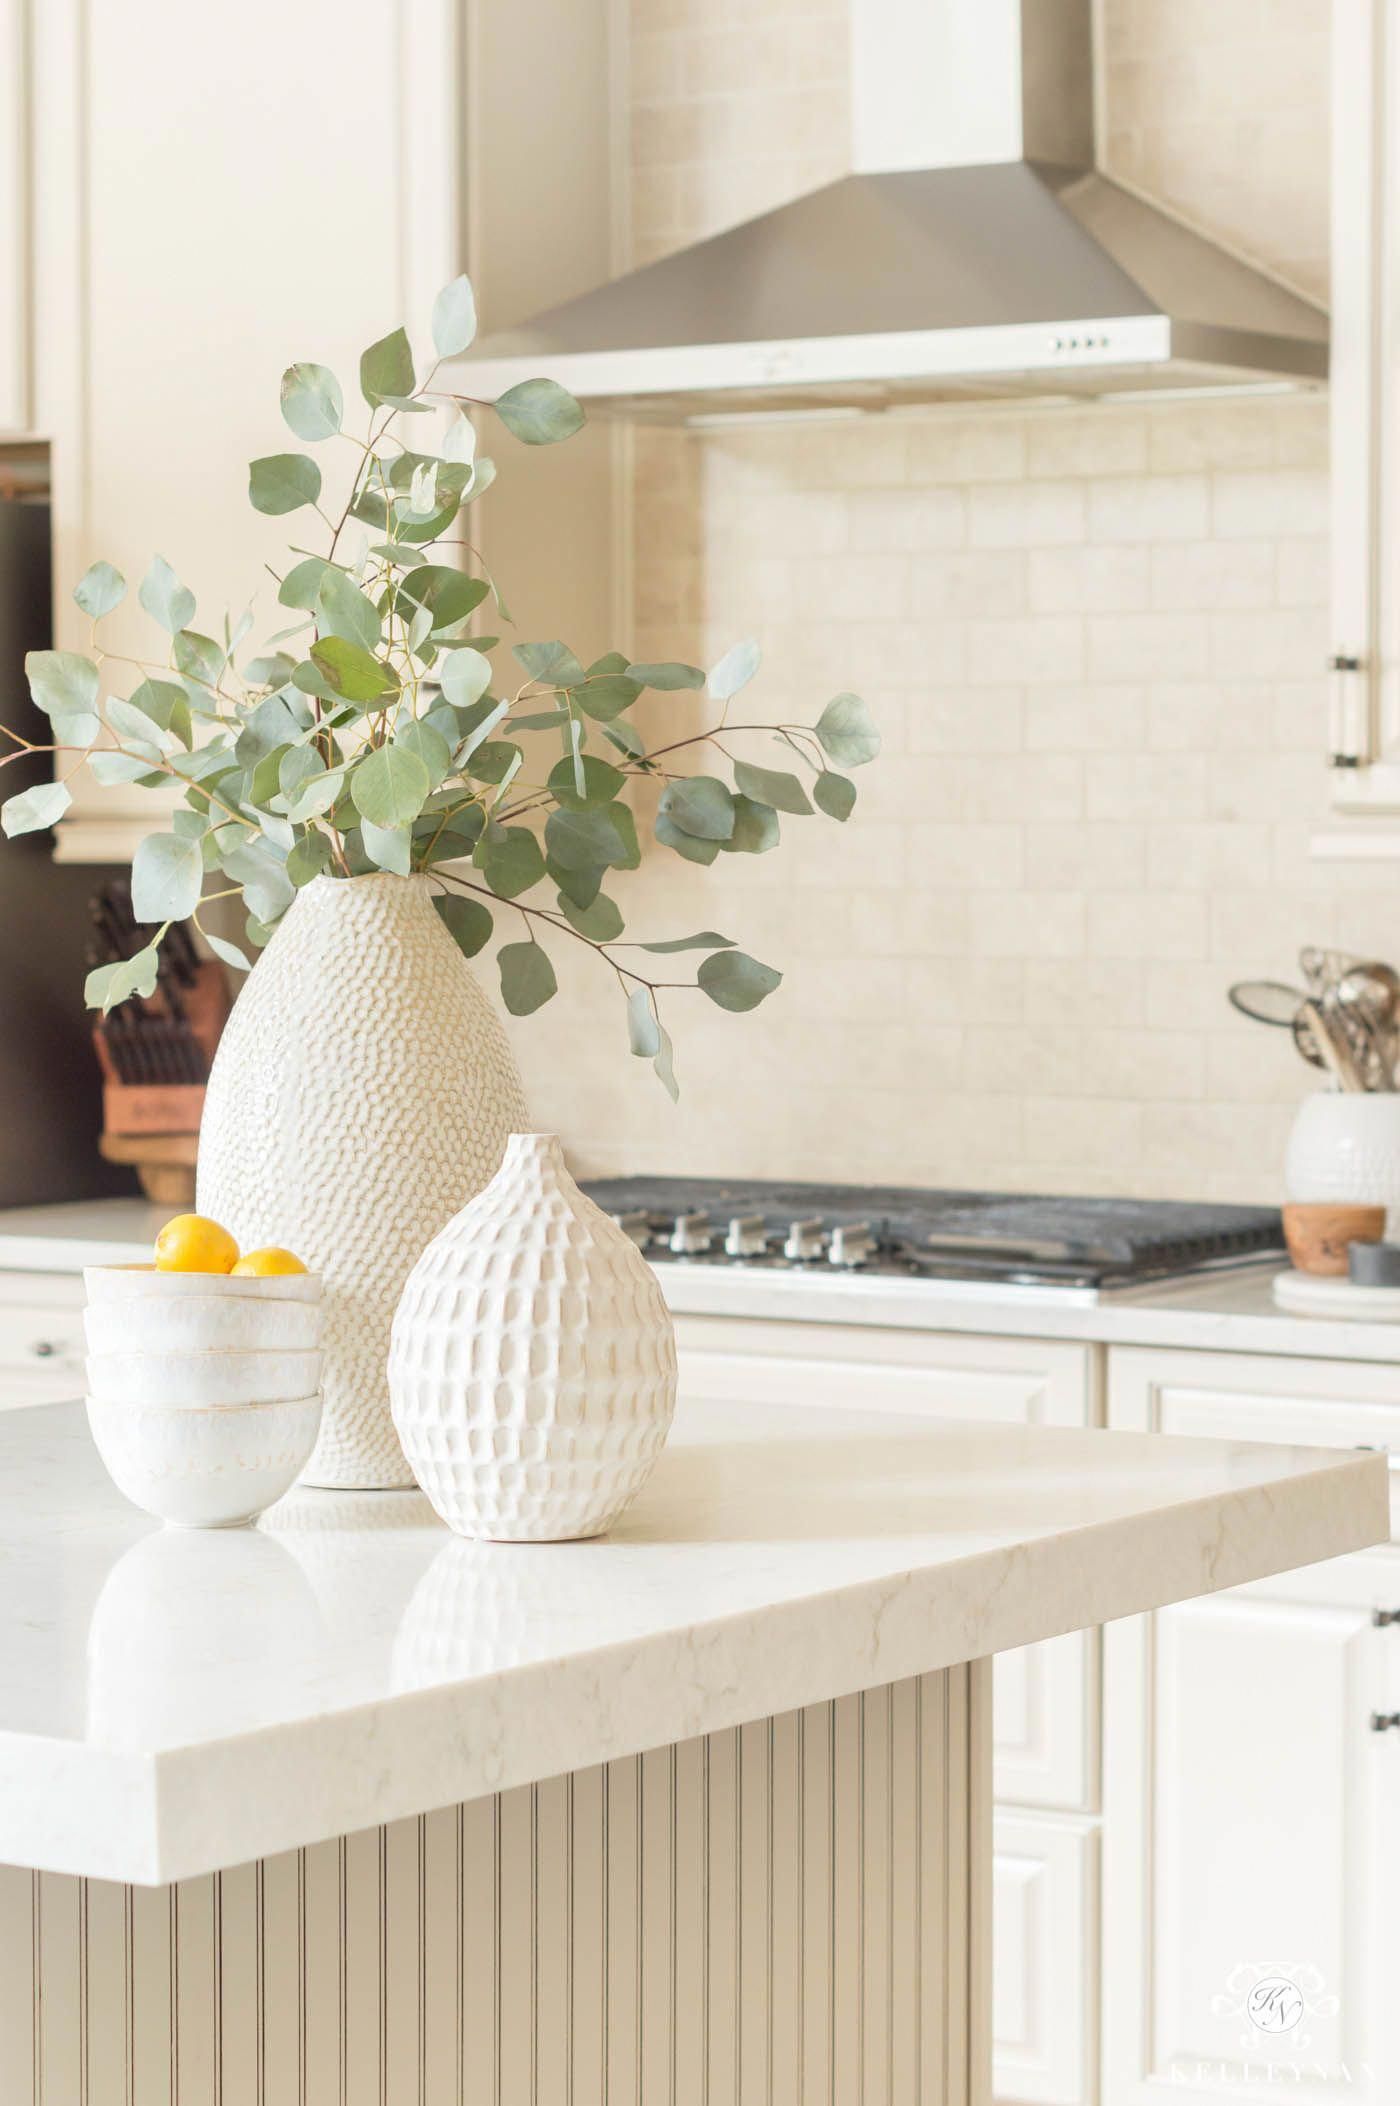 Transform Your Kitchen with Stylish Island Decor Ideas